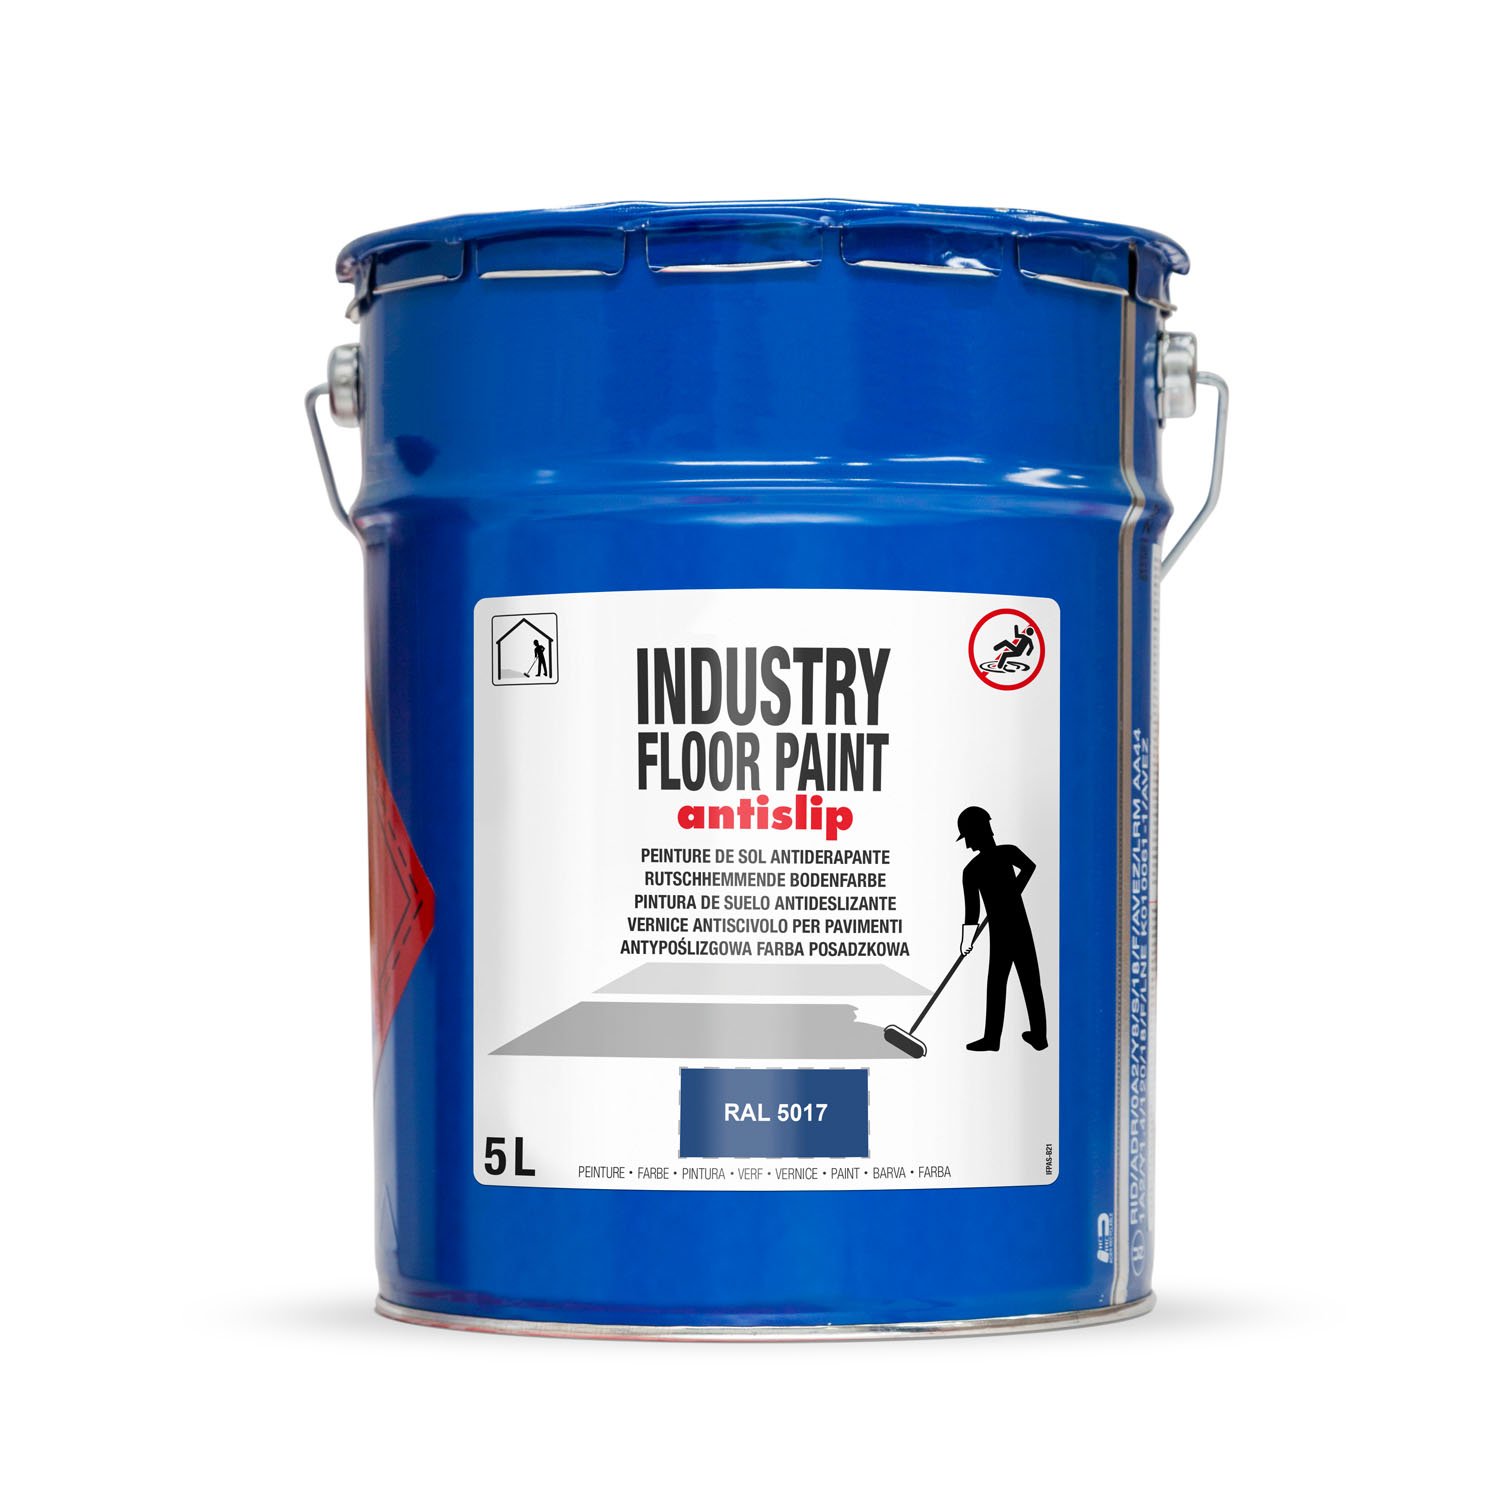 Modellbeispiel: Bodenmarkierungsfarbe -Industry Floor Paint Anti-Rutsch- in blau (Art. 41472.0001)